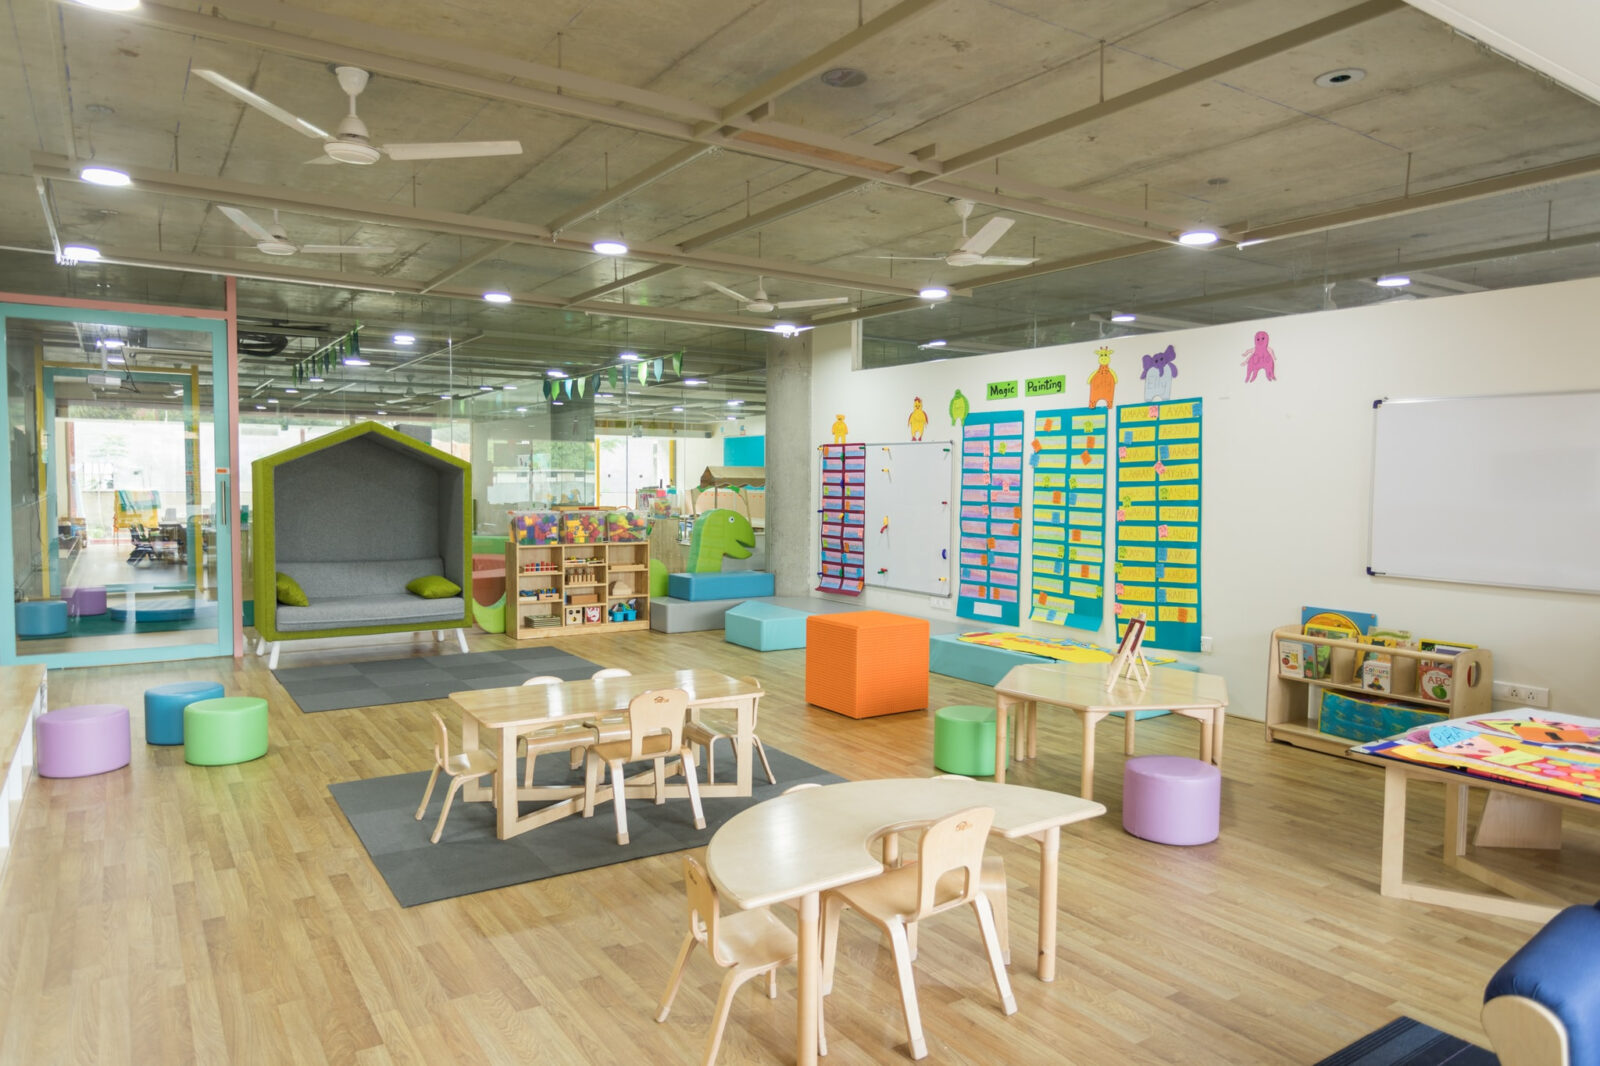 Large, brightly decorated preschool classroom
